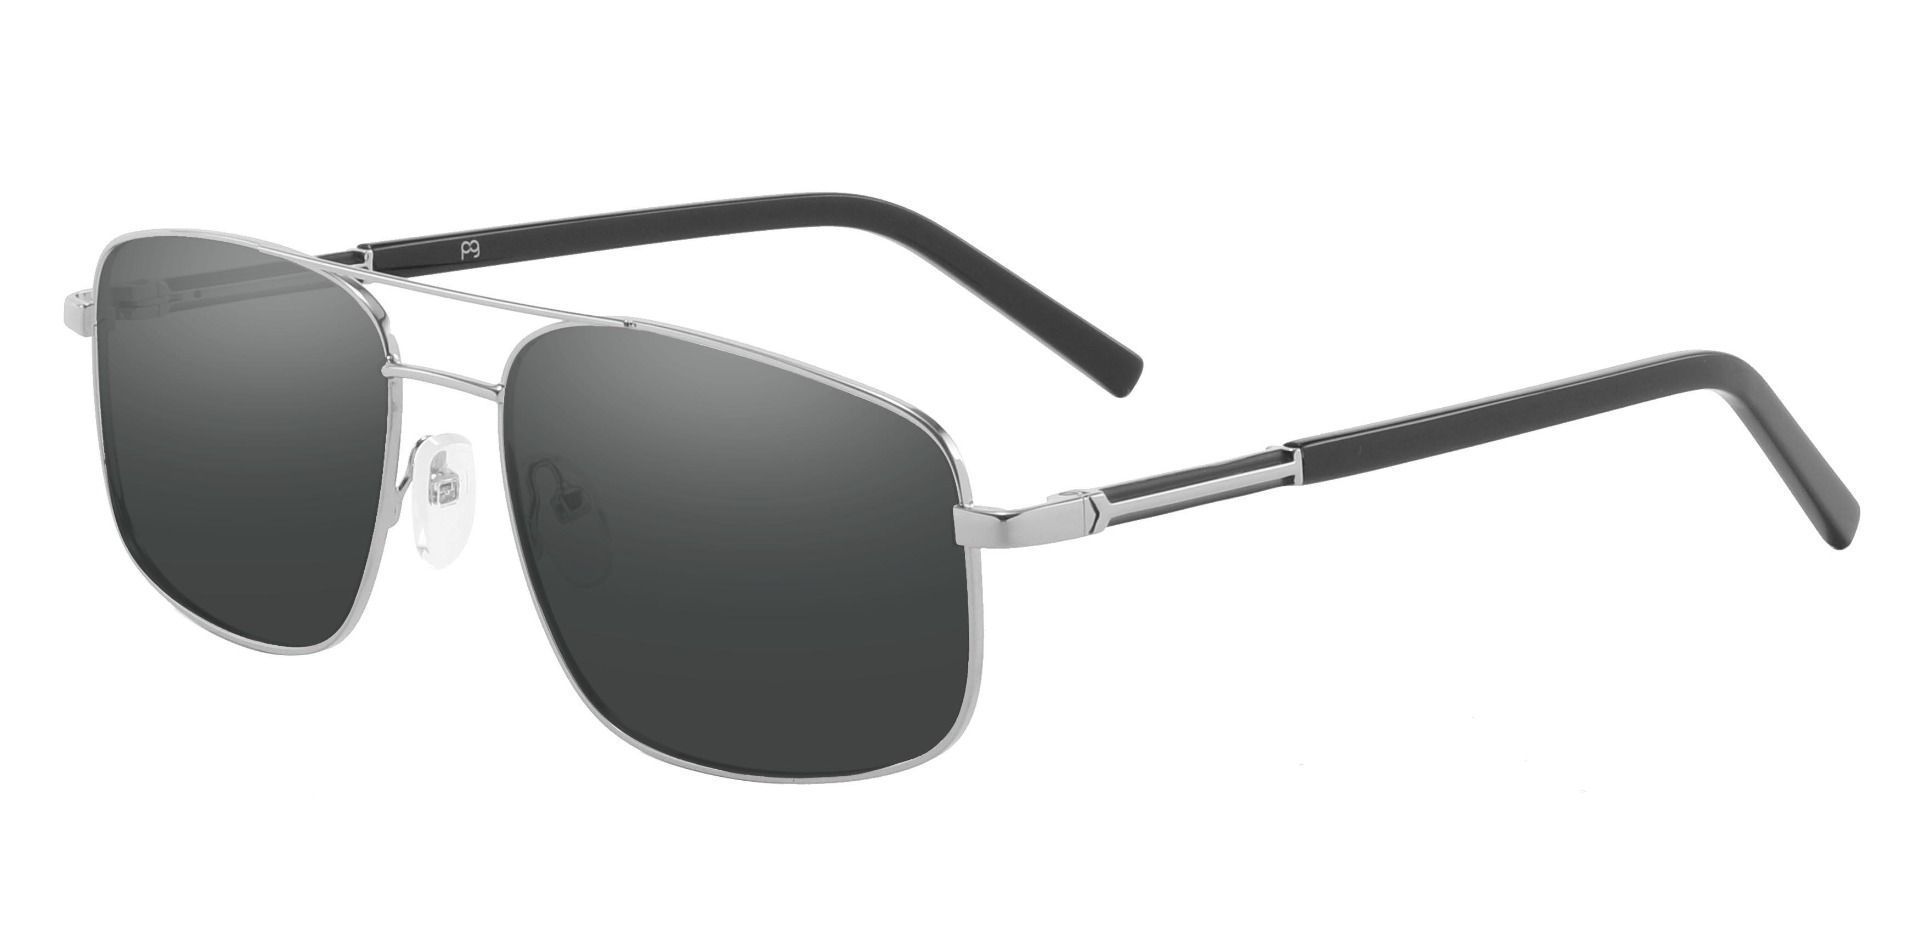 Davenport Aviator Lined Bifocal Sunglasses - Silver Frame With Gray Lenses